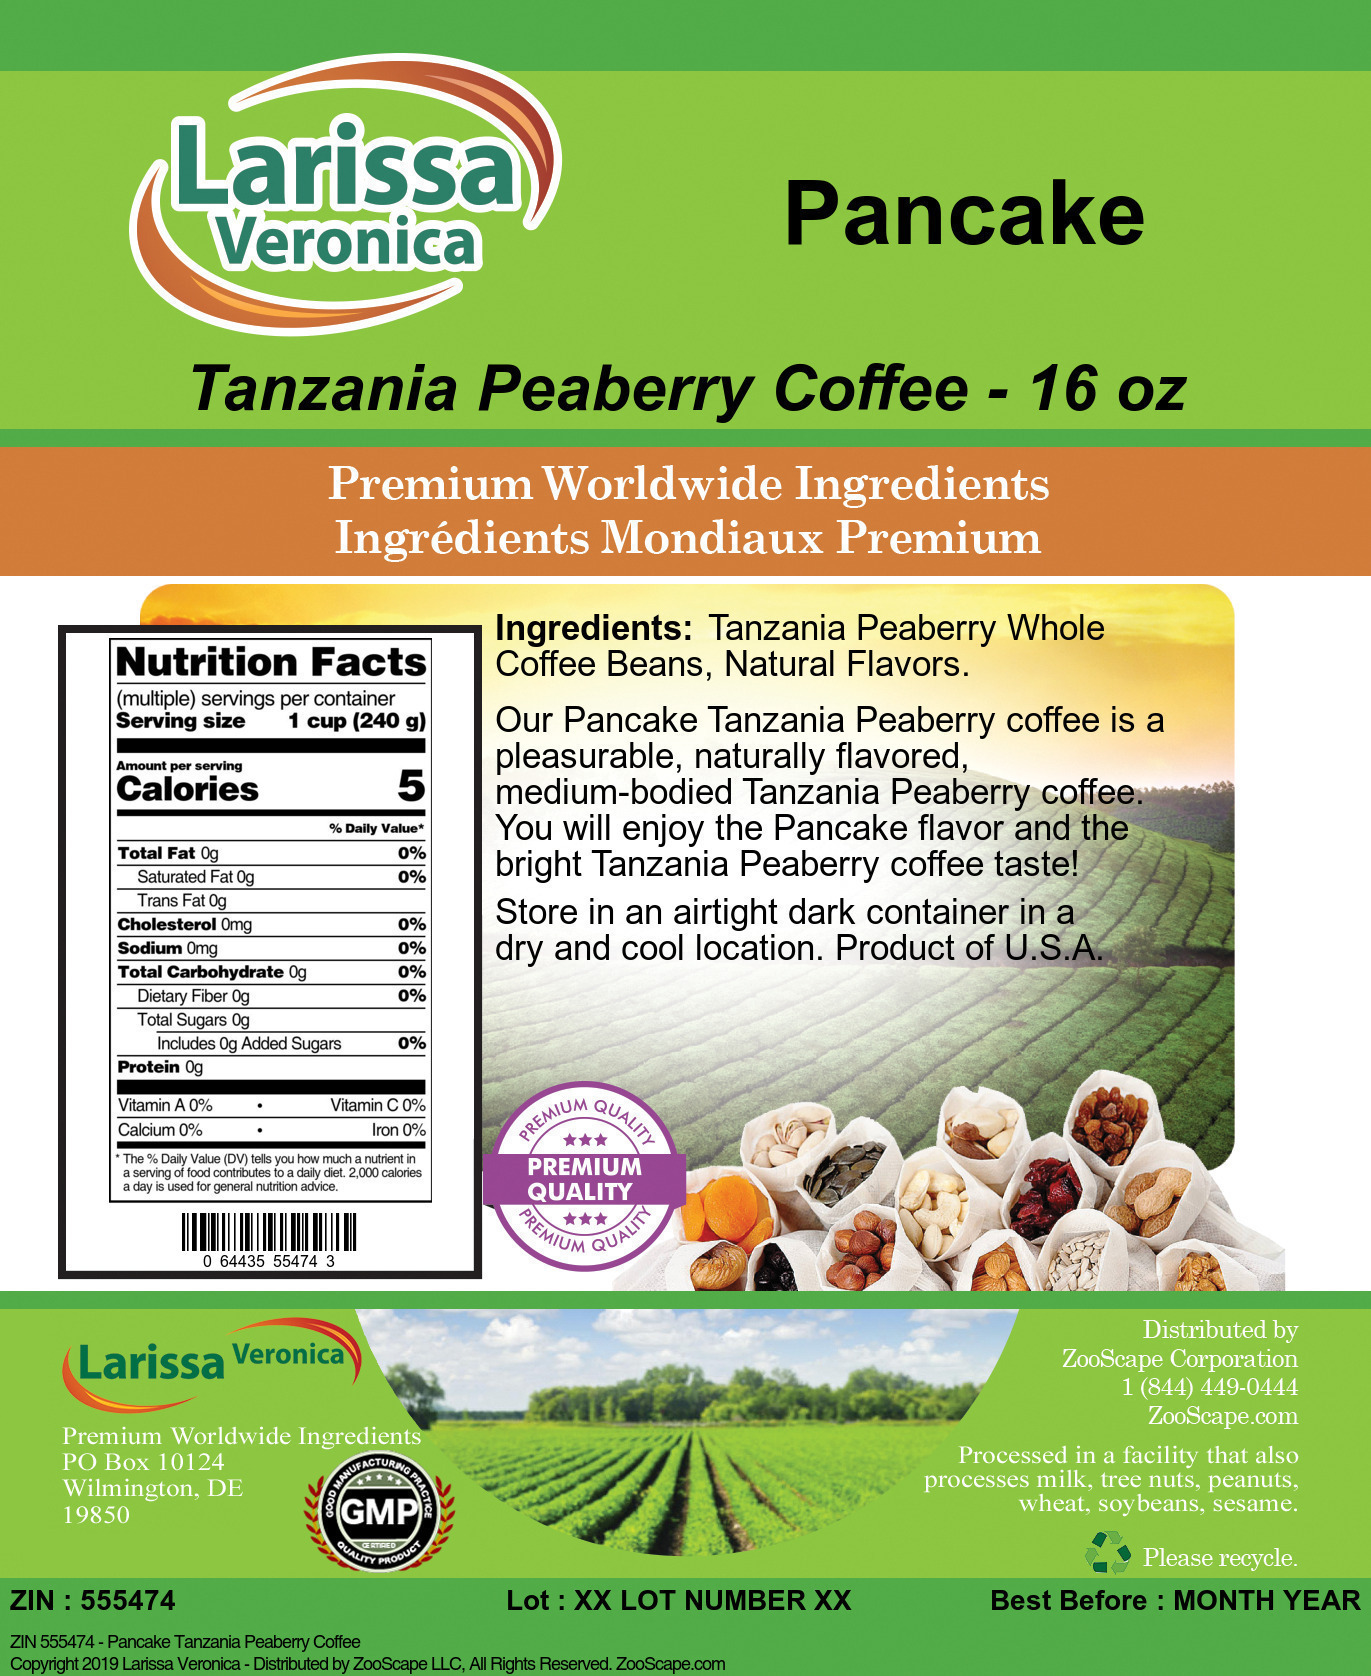 Pancake Tanzania Peaberry Coffee - Label